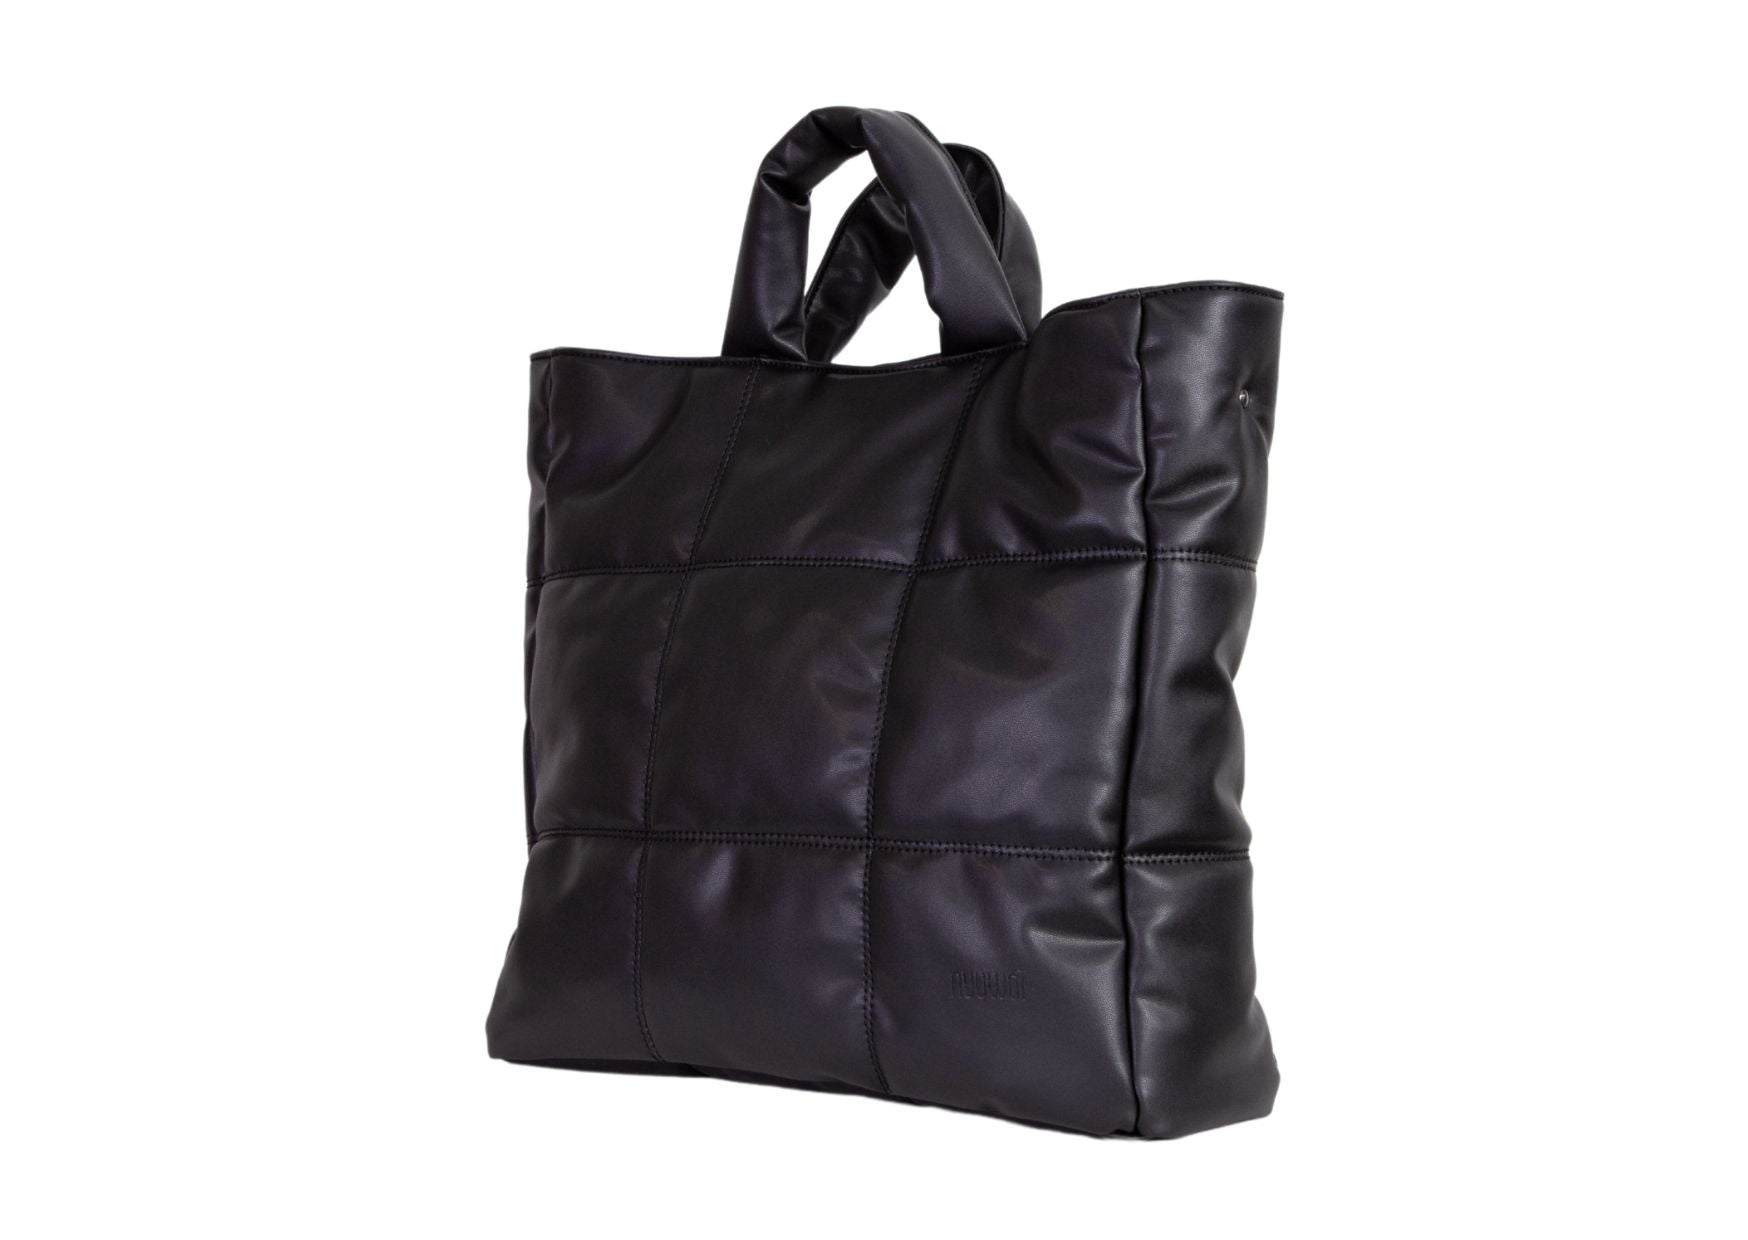 nuuwai sustainable pillow bag Linn in deep black